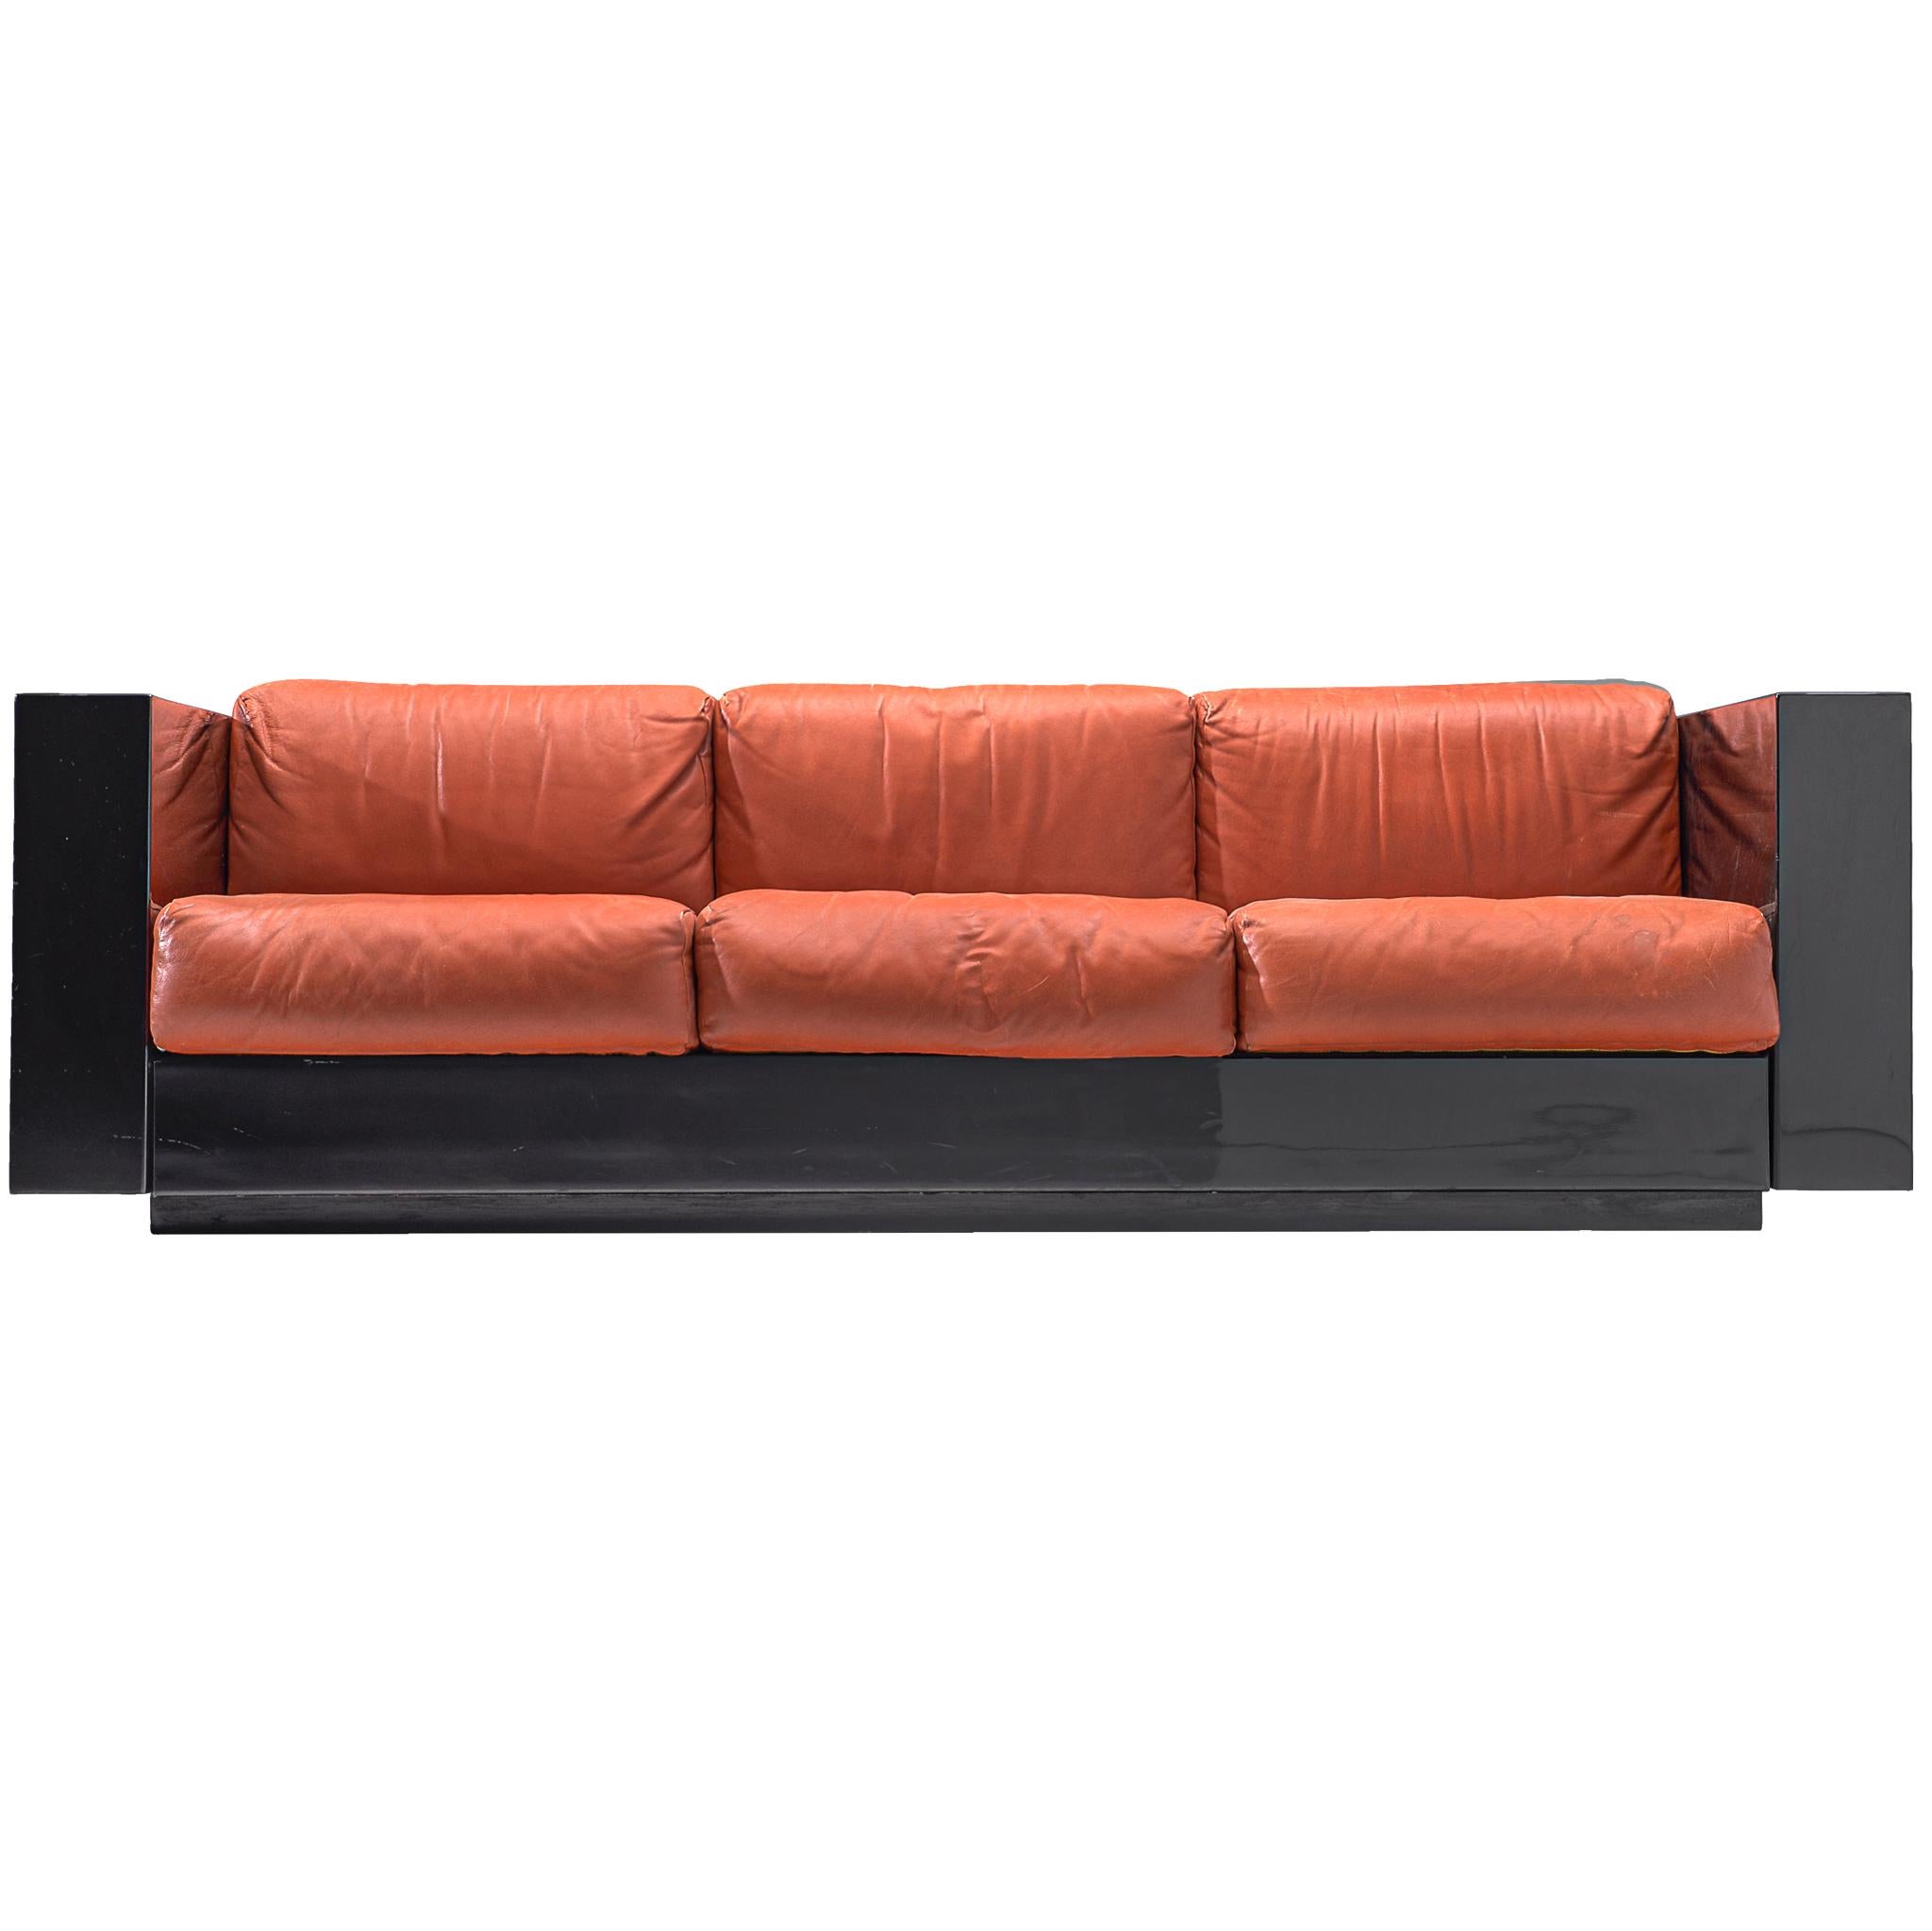 Vignelli Saratoga Large Black Sofa with Red Leather